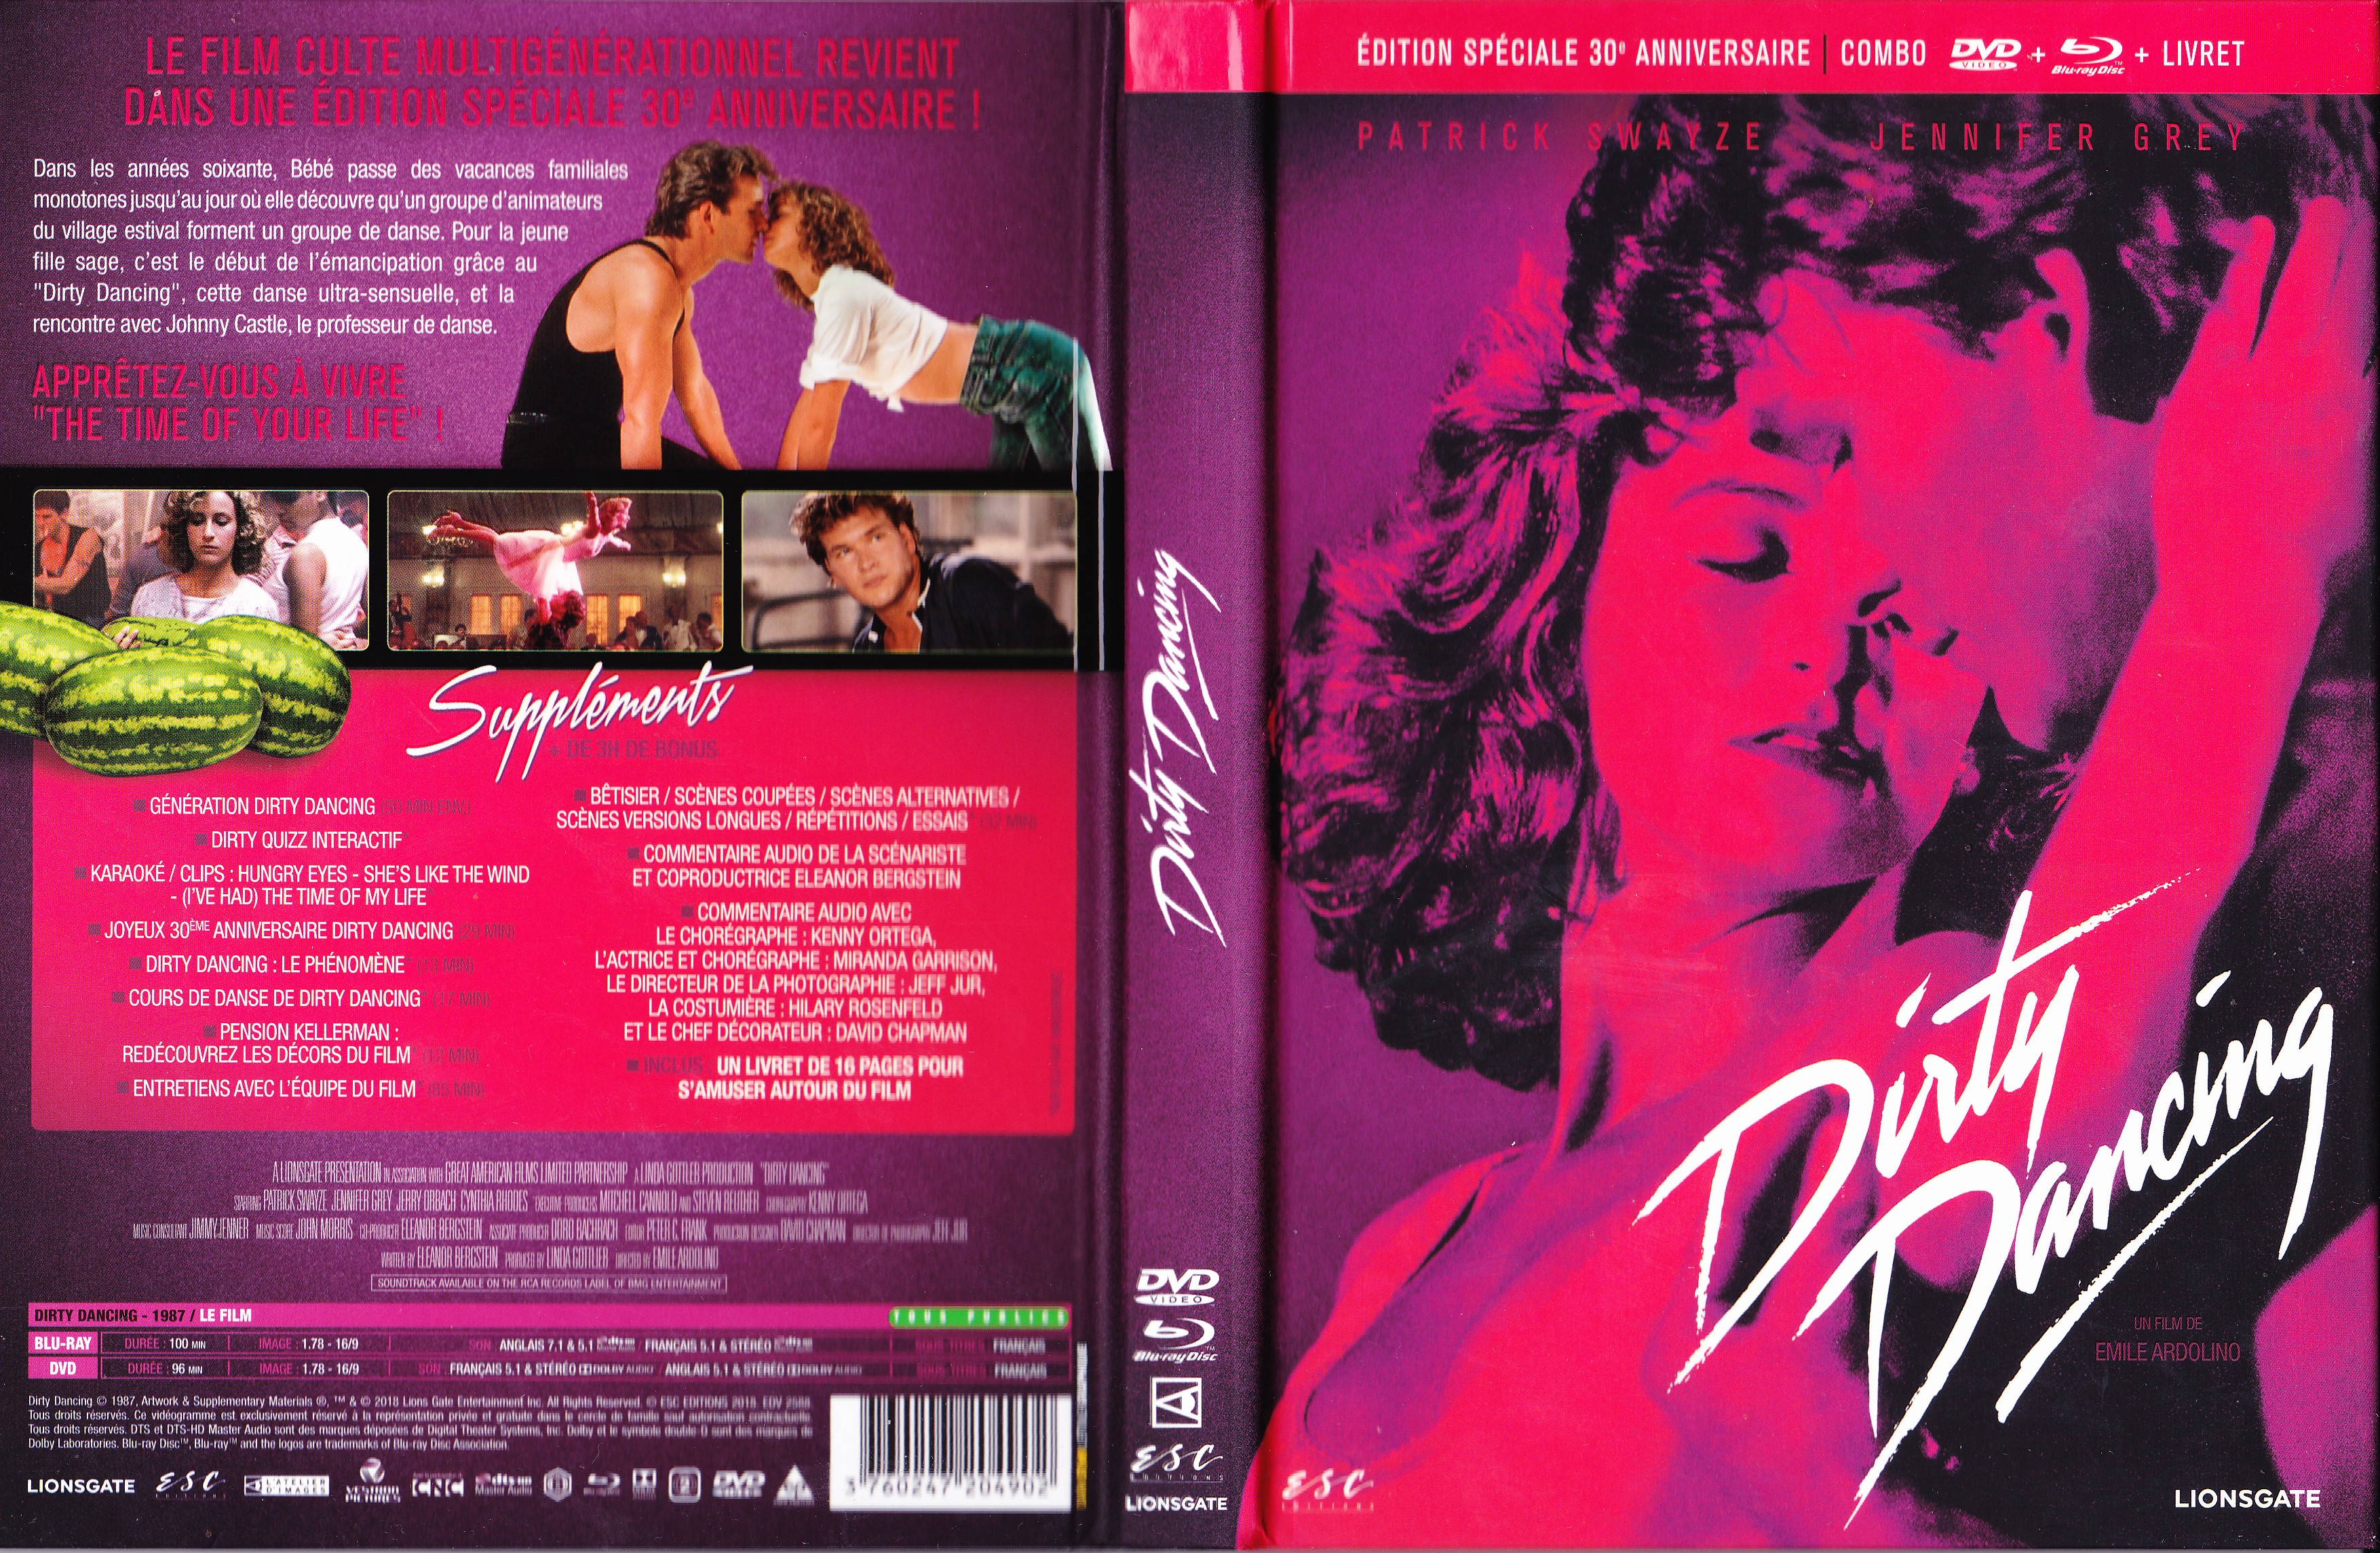 Jaquette DVD Dirty Dancing (BLU-RAY) v2